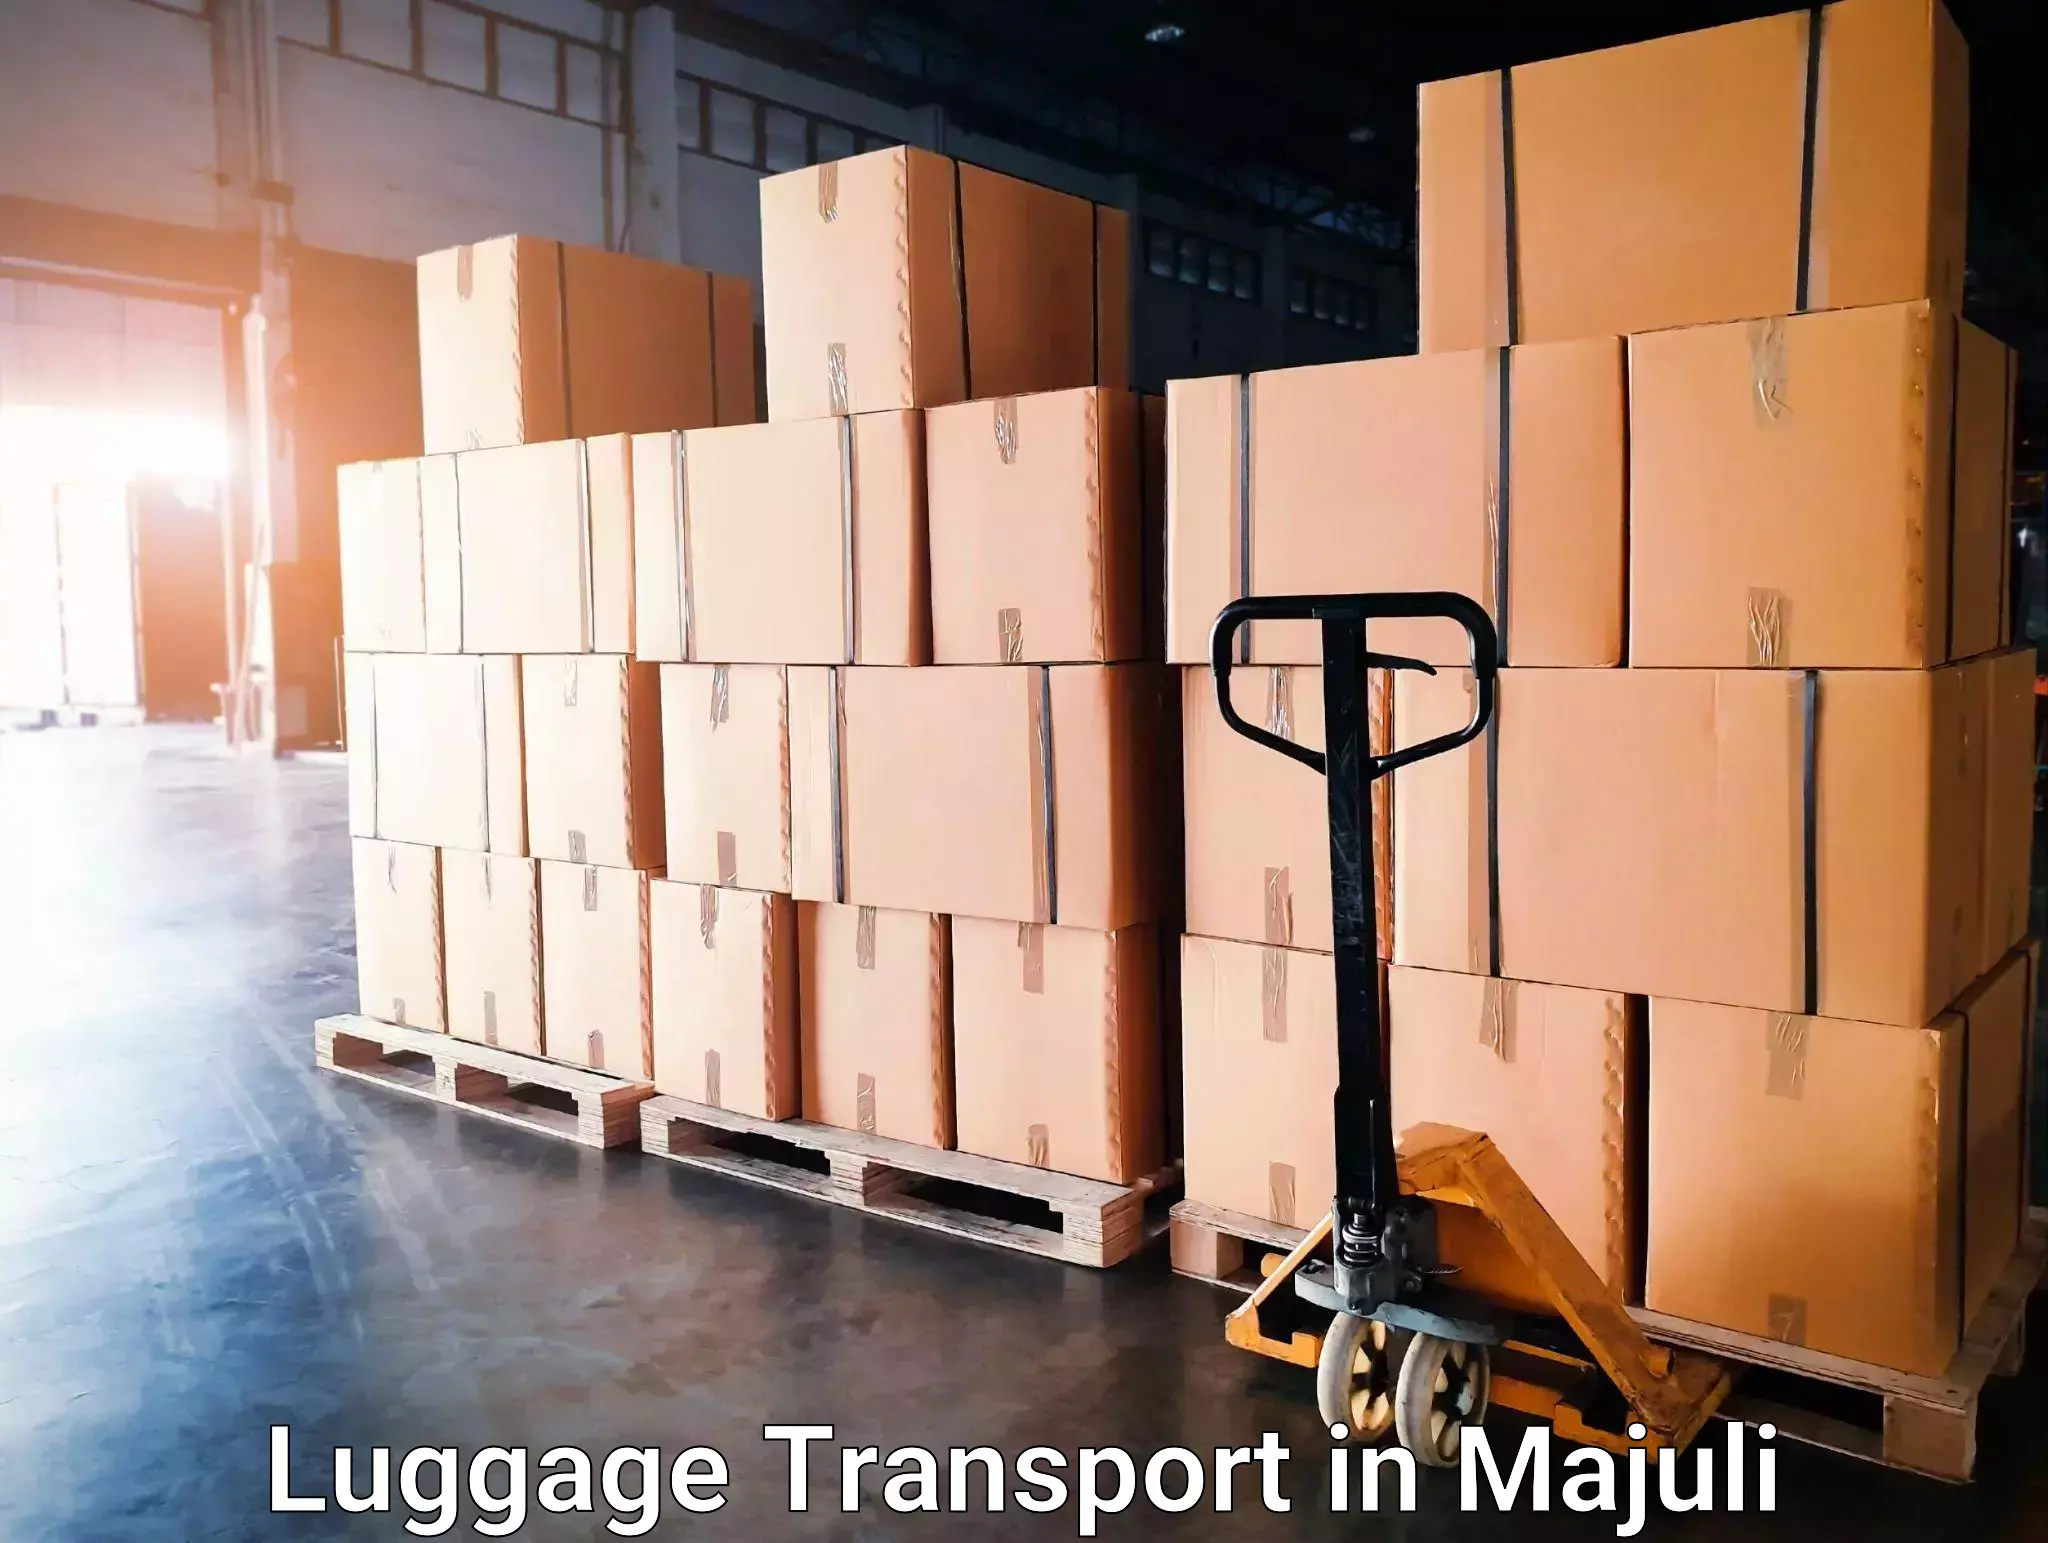 Luggage transport service in Majuli